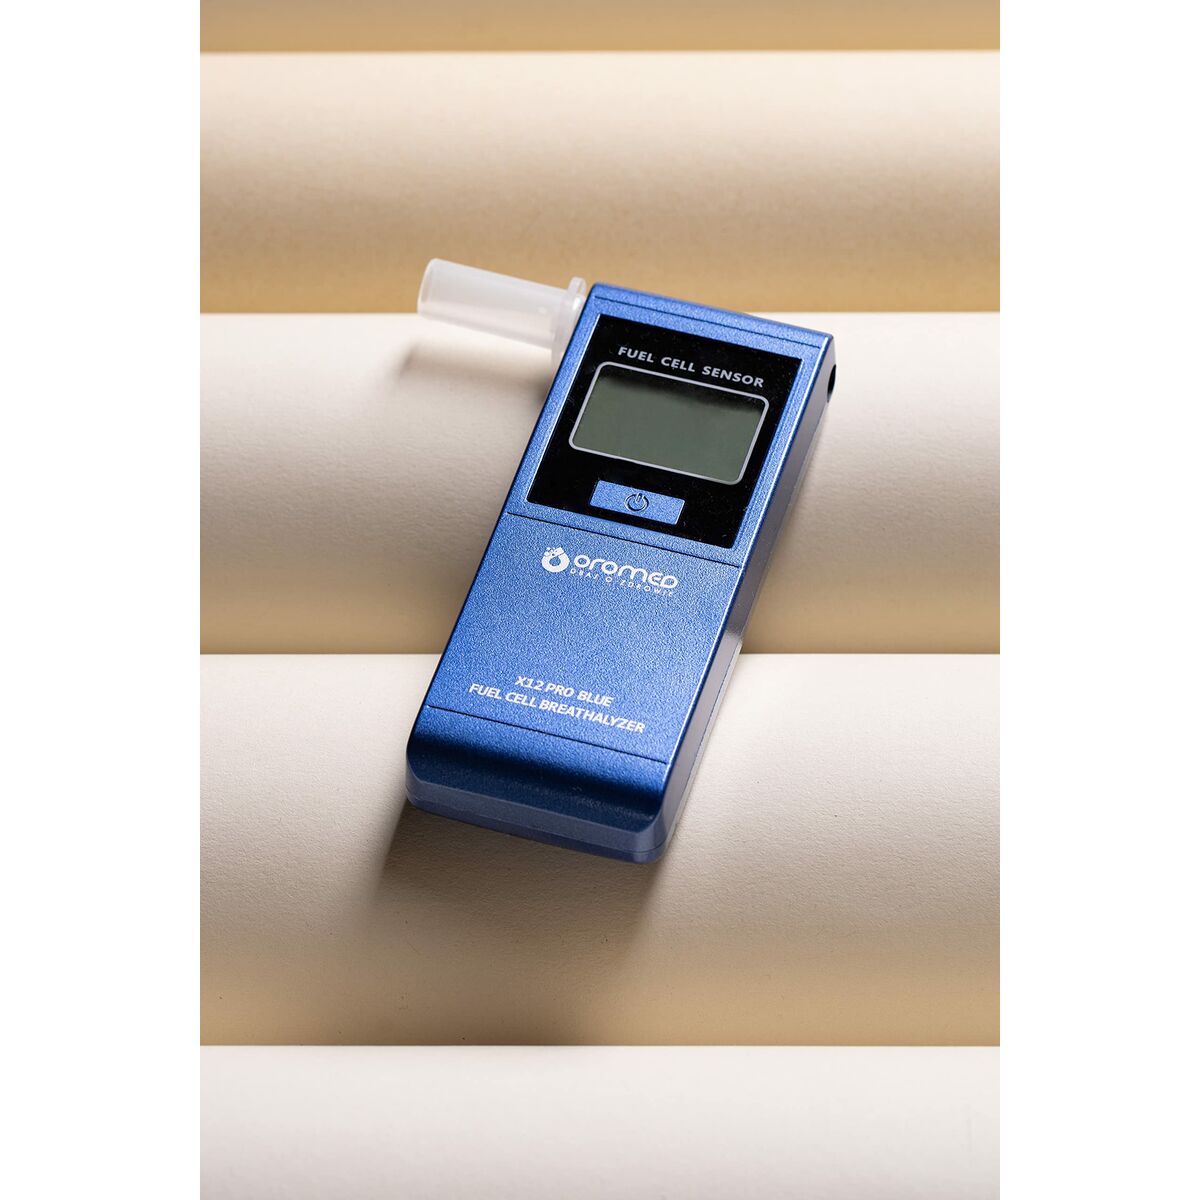 Etilometro digitale Oromed X12 PRO BLUE Azzurro